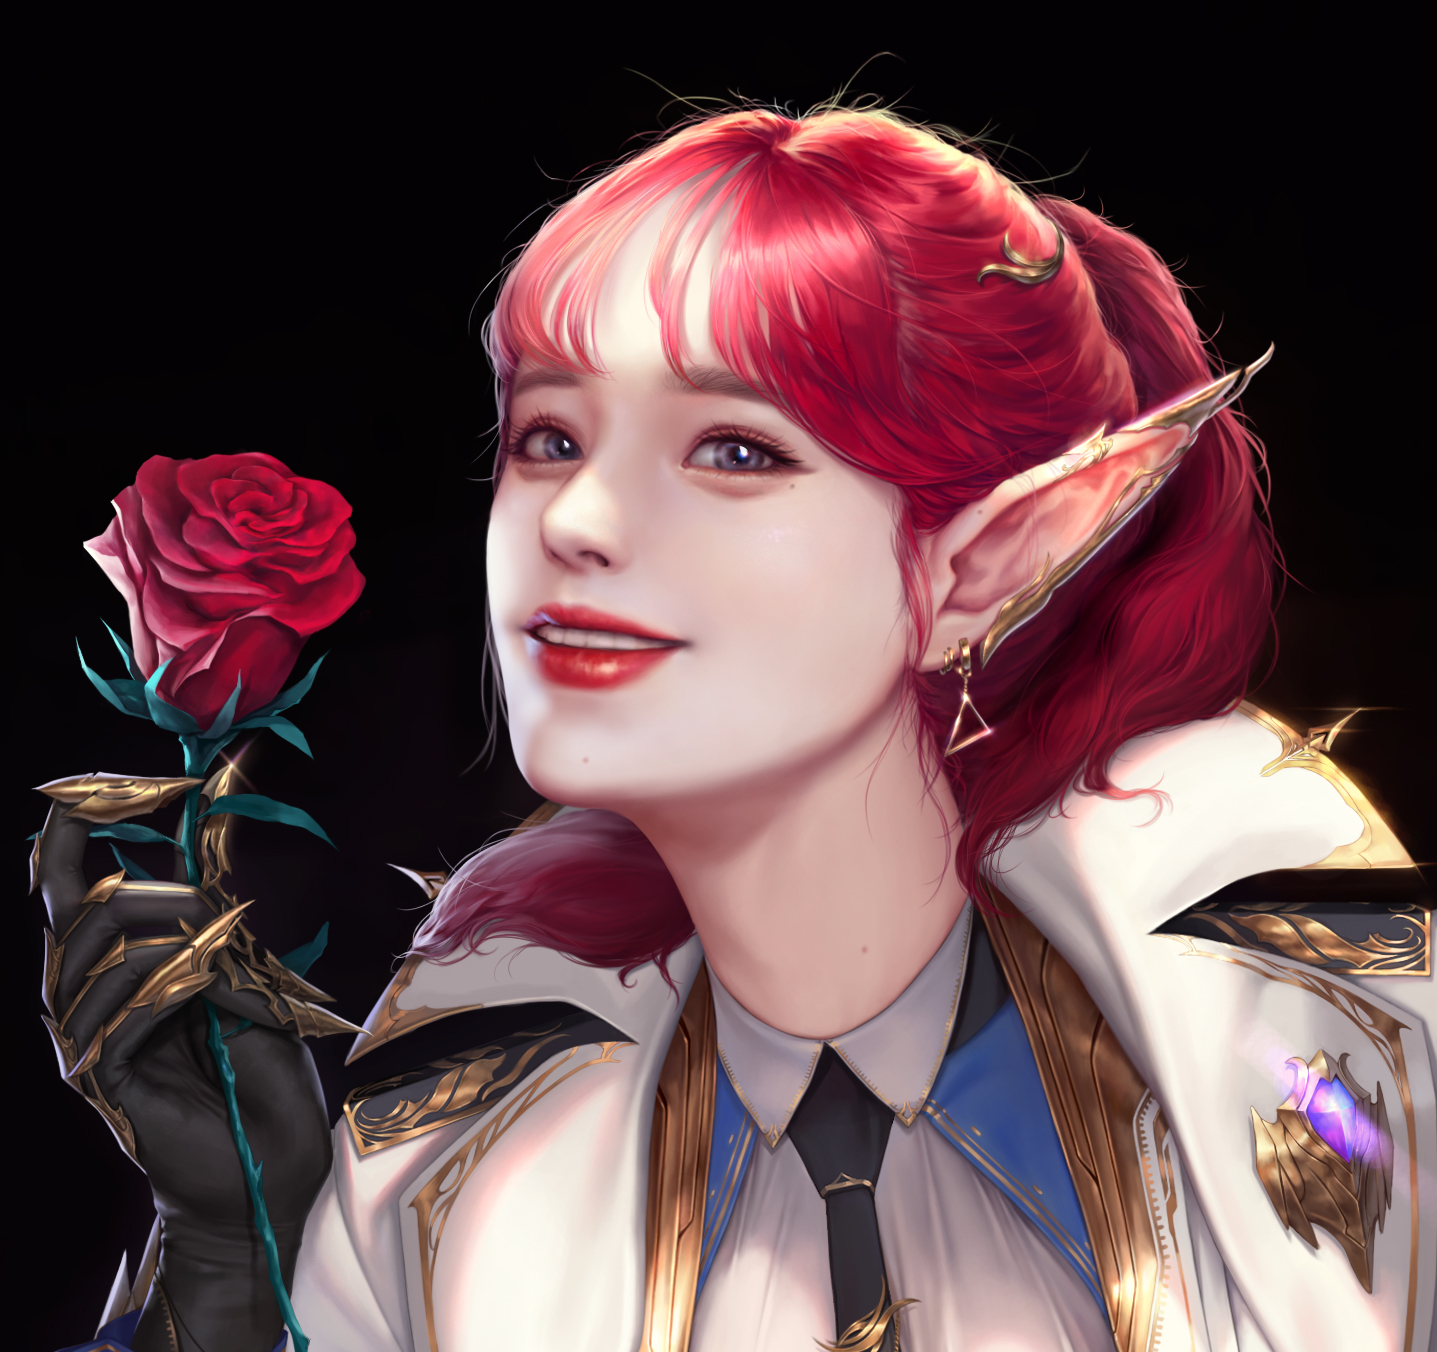 General 1437x1352 fantasy girl painting Yong Jun Park redhead pointy ears rose